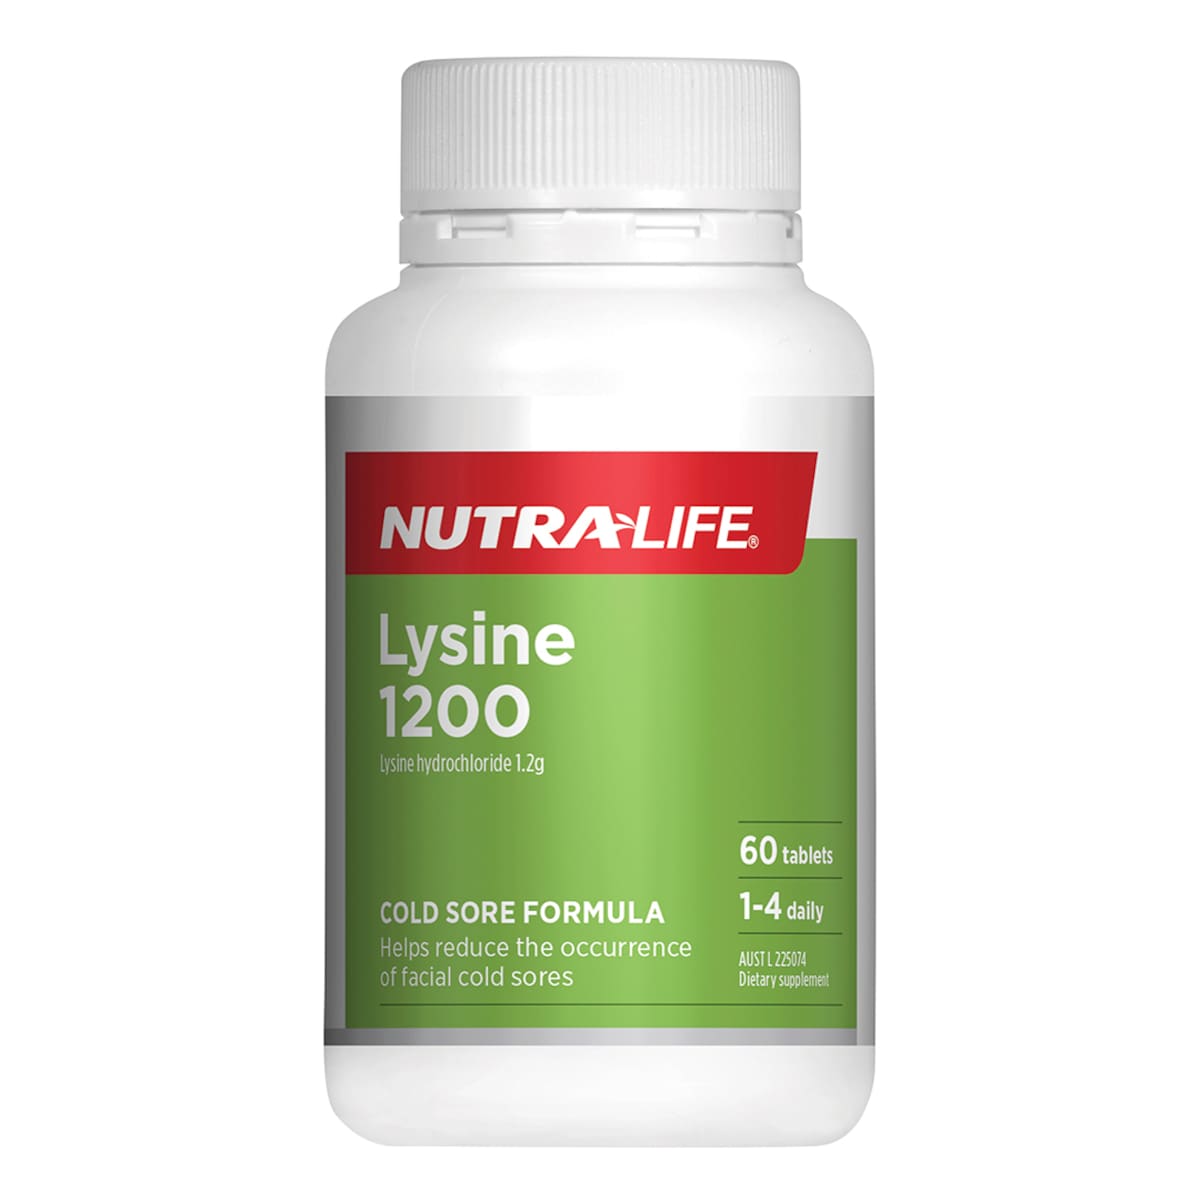 Nutra-Life Lysine 1200mg 60 Tablets Australia